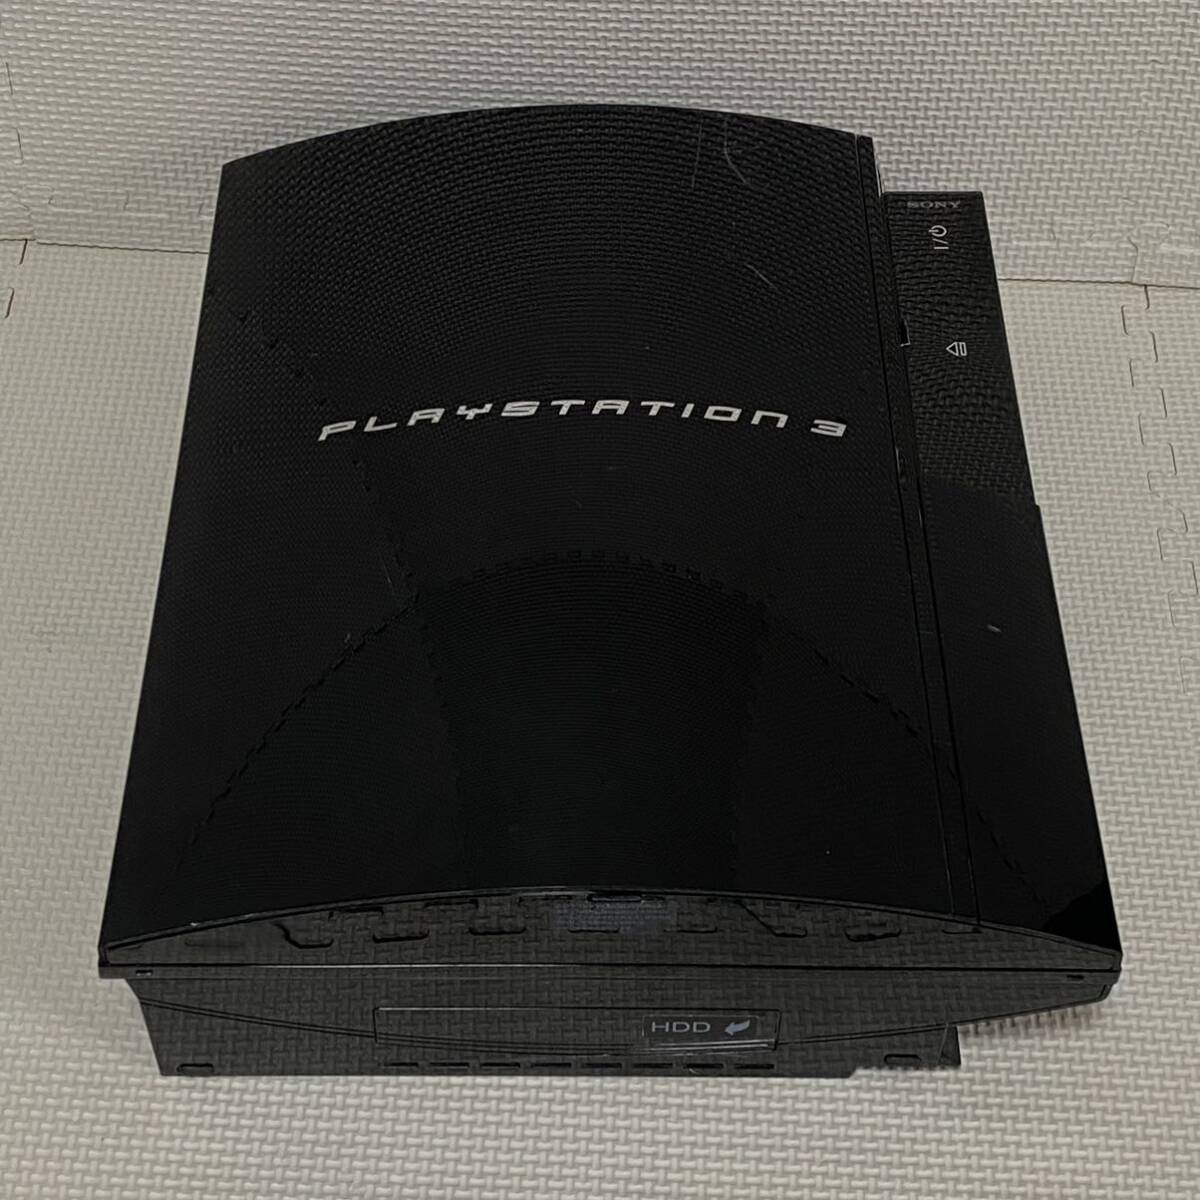 k 1円☆ PS3 20GB CECHB00 FW:4.46 SONY プレステ3 初期型 プレイステーション PlayStation 本体 コントローラ 2個セット DUALSHOCK PS2 